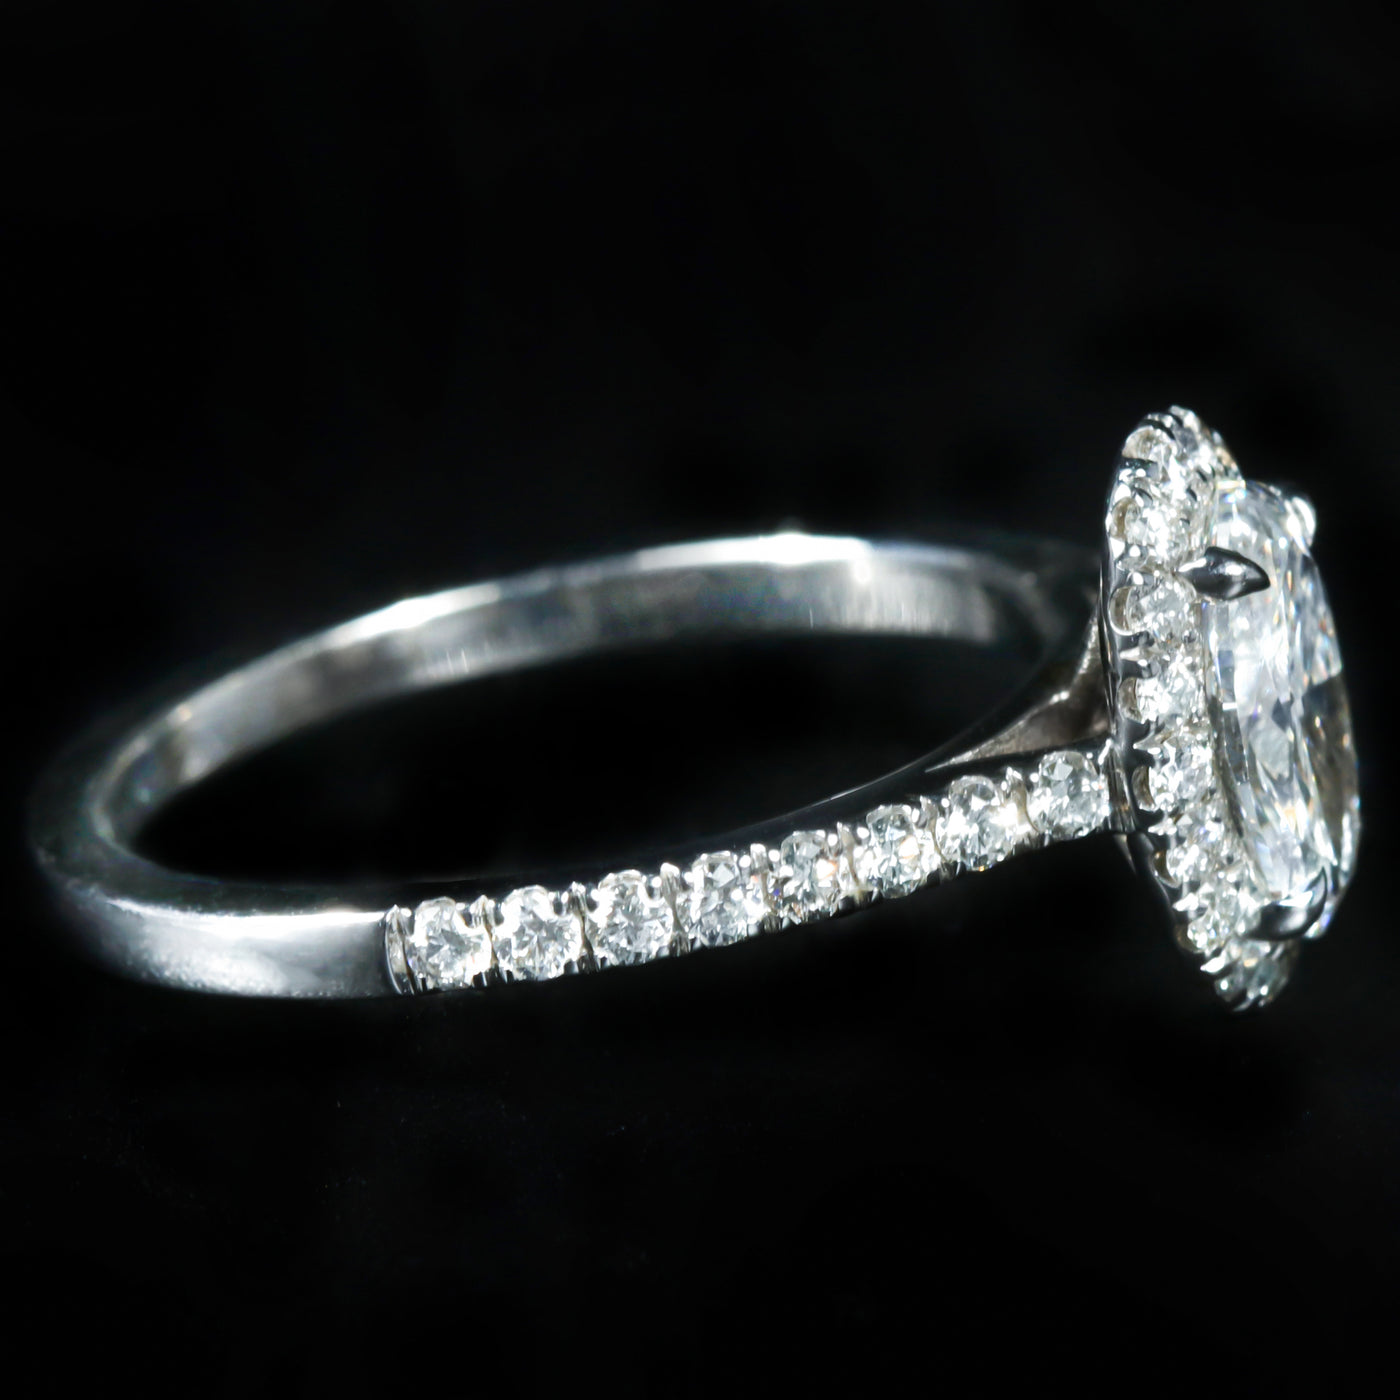 18k White Gold GIA 0.85 Carat Oval Cut Diamond Engagement Ring